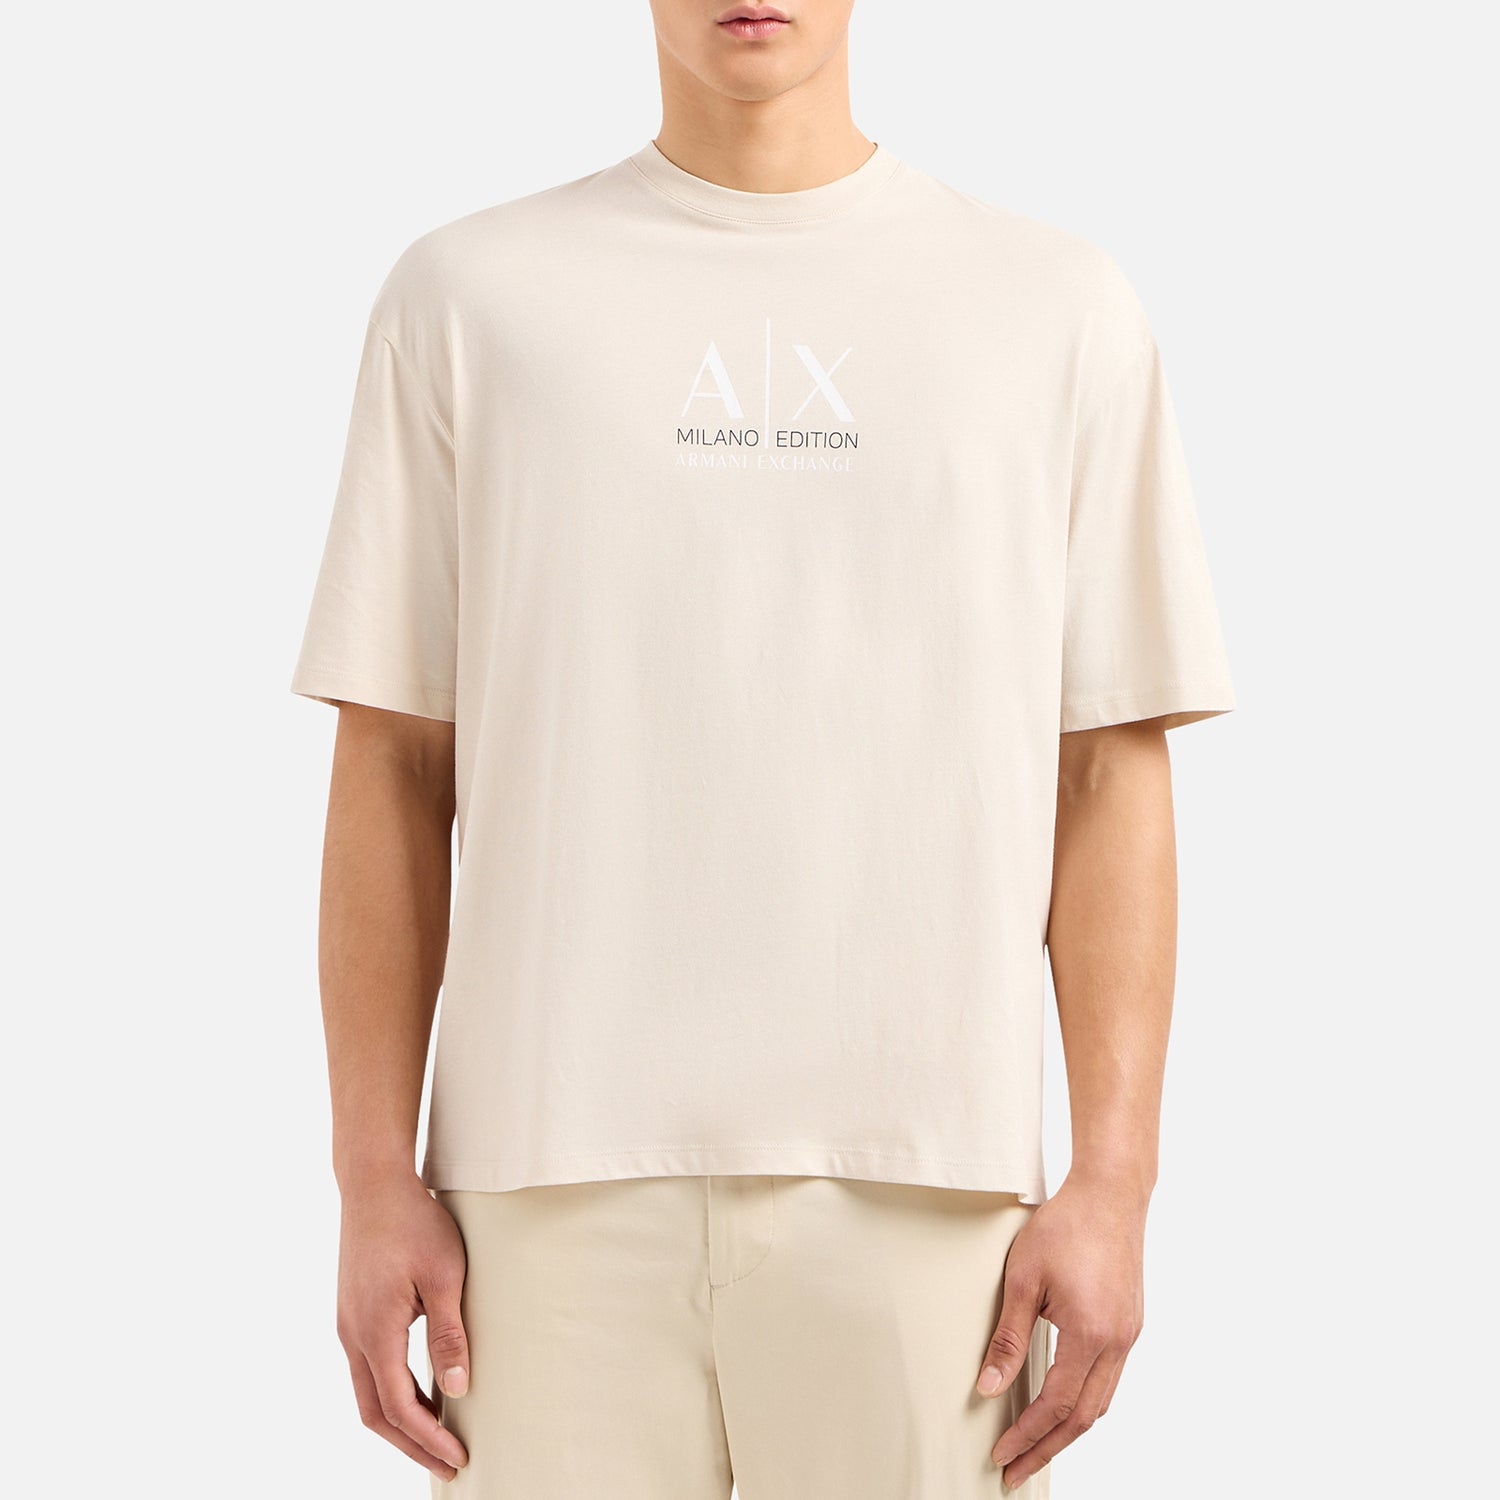 Armani Exchange Milano Edition Cotton Sustainable T-Shirt - S